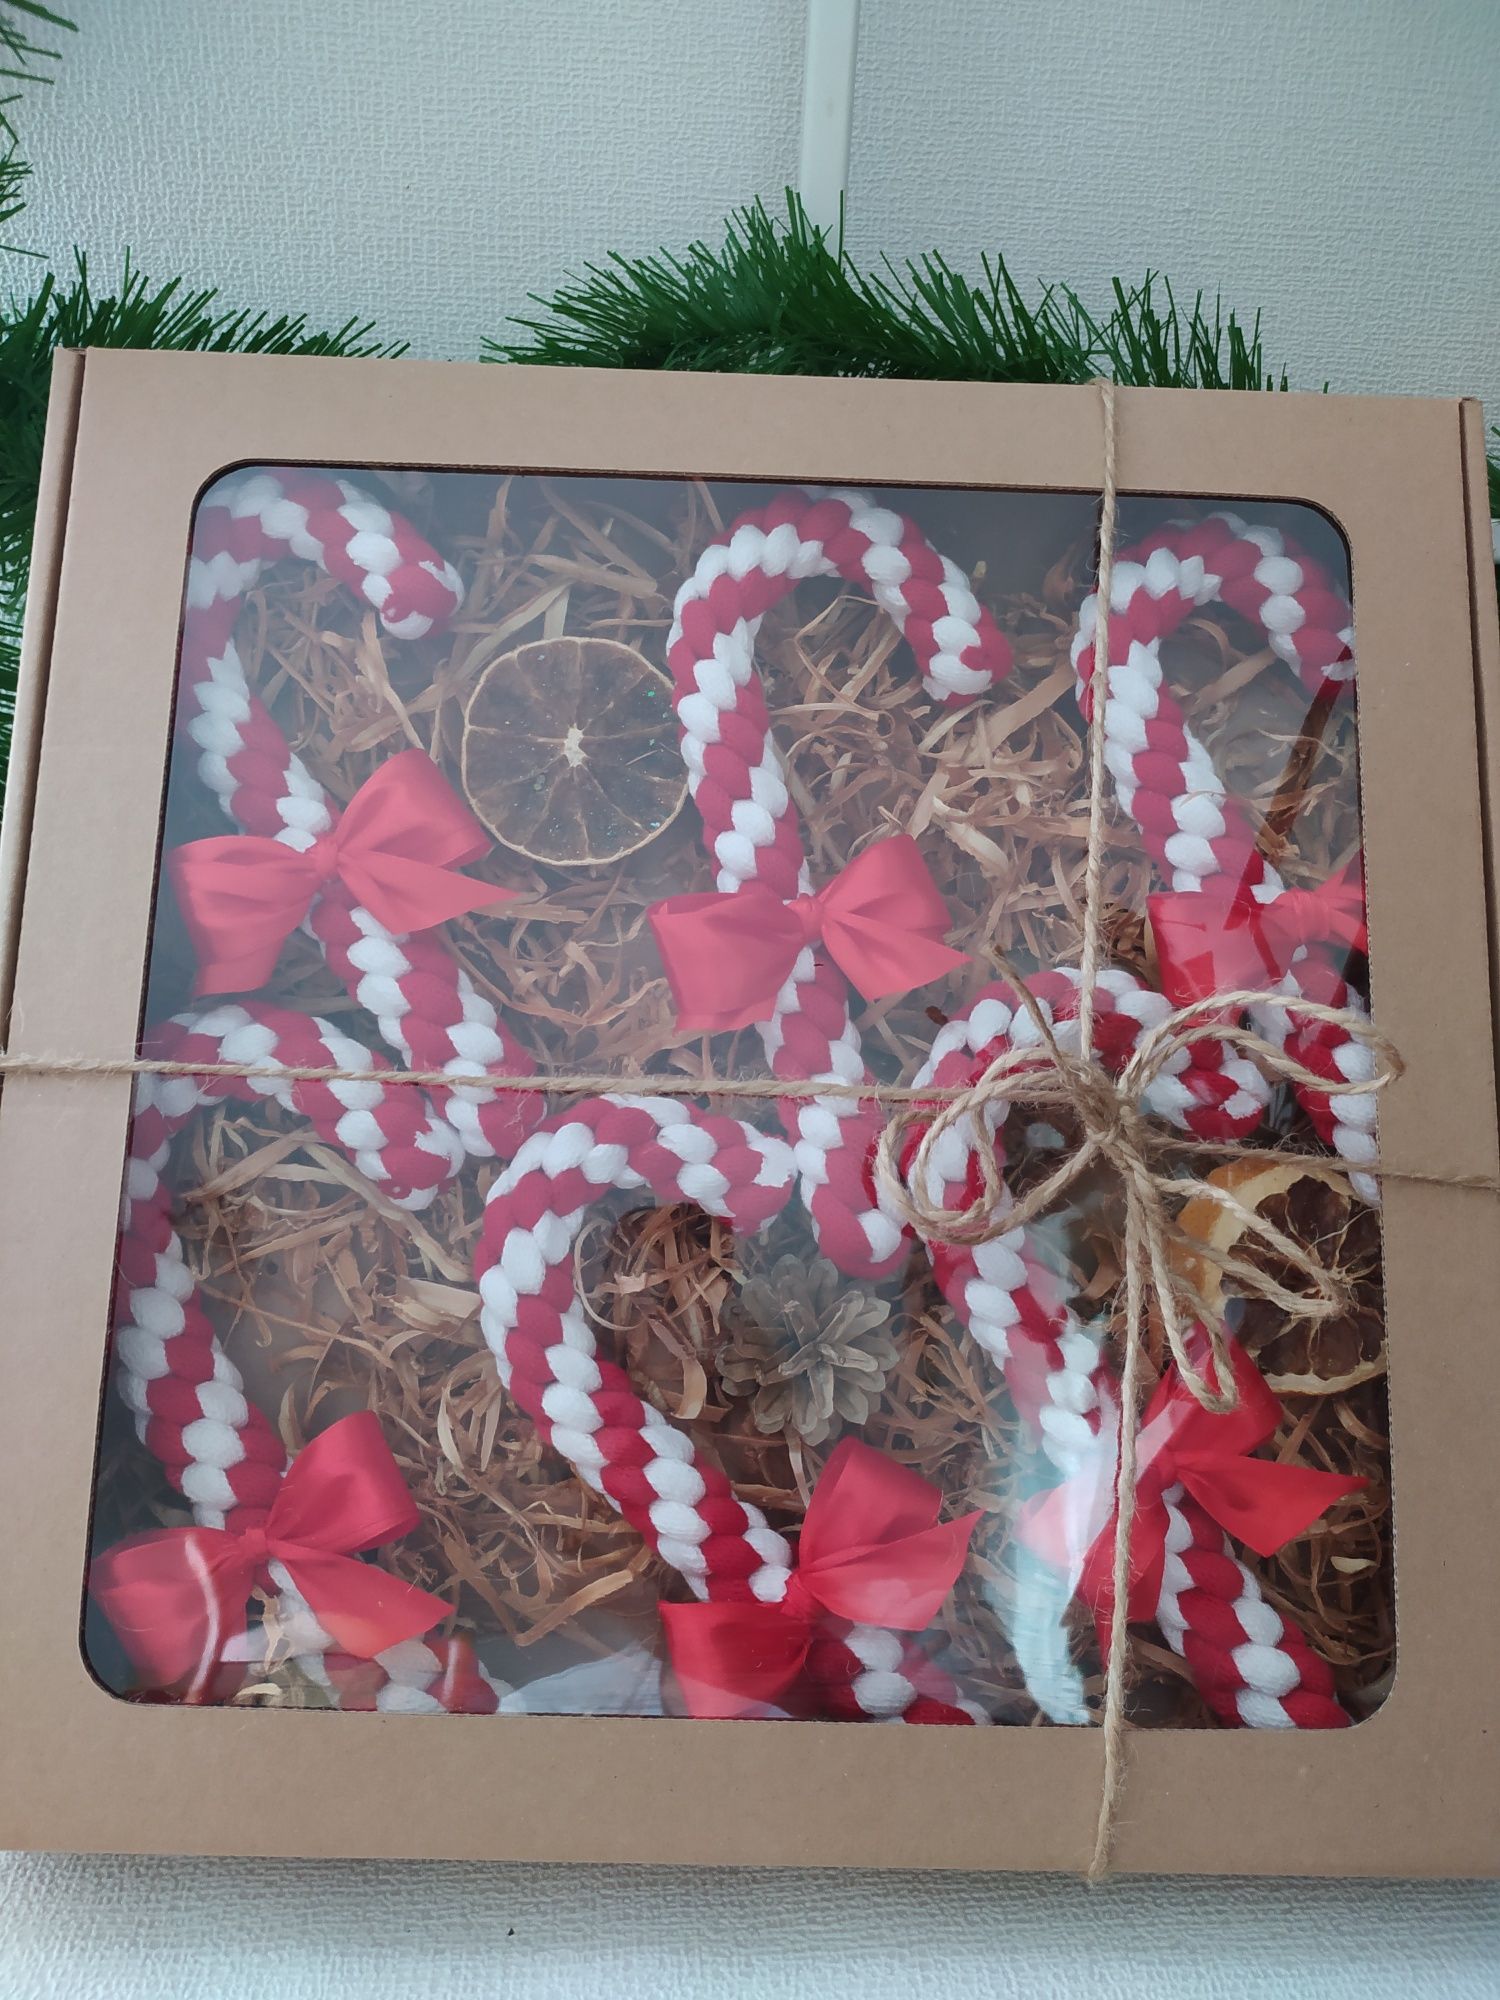 Laski lizaki "cukrowe" makrama dekoracje bożonarodzeniowe upominki